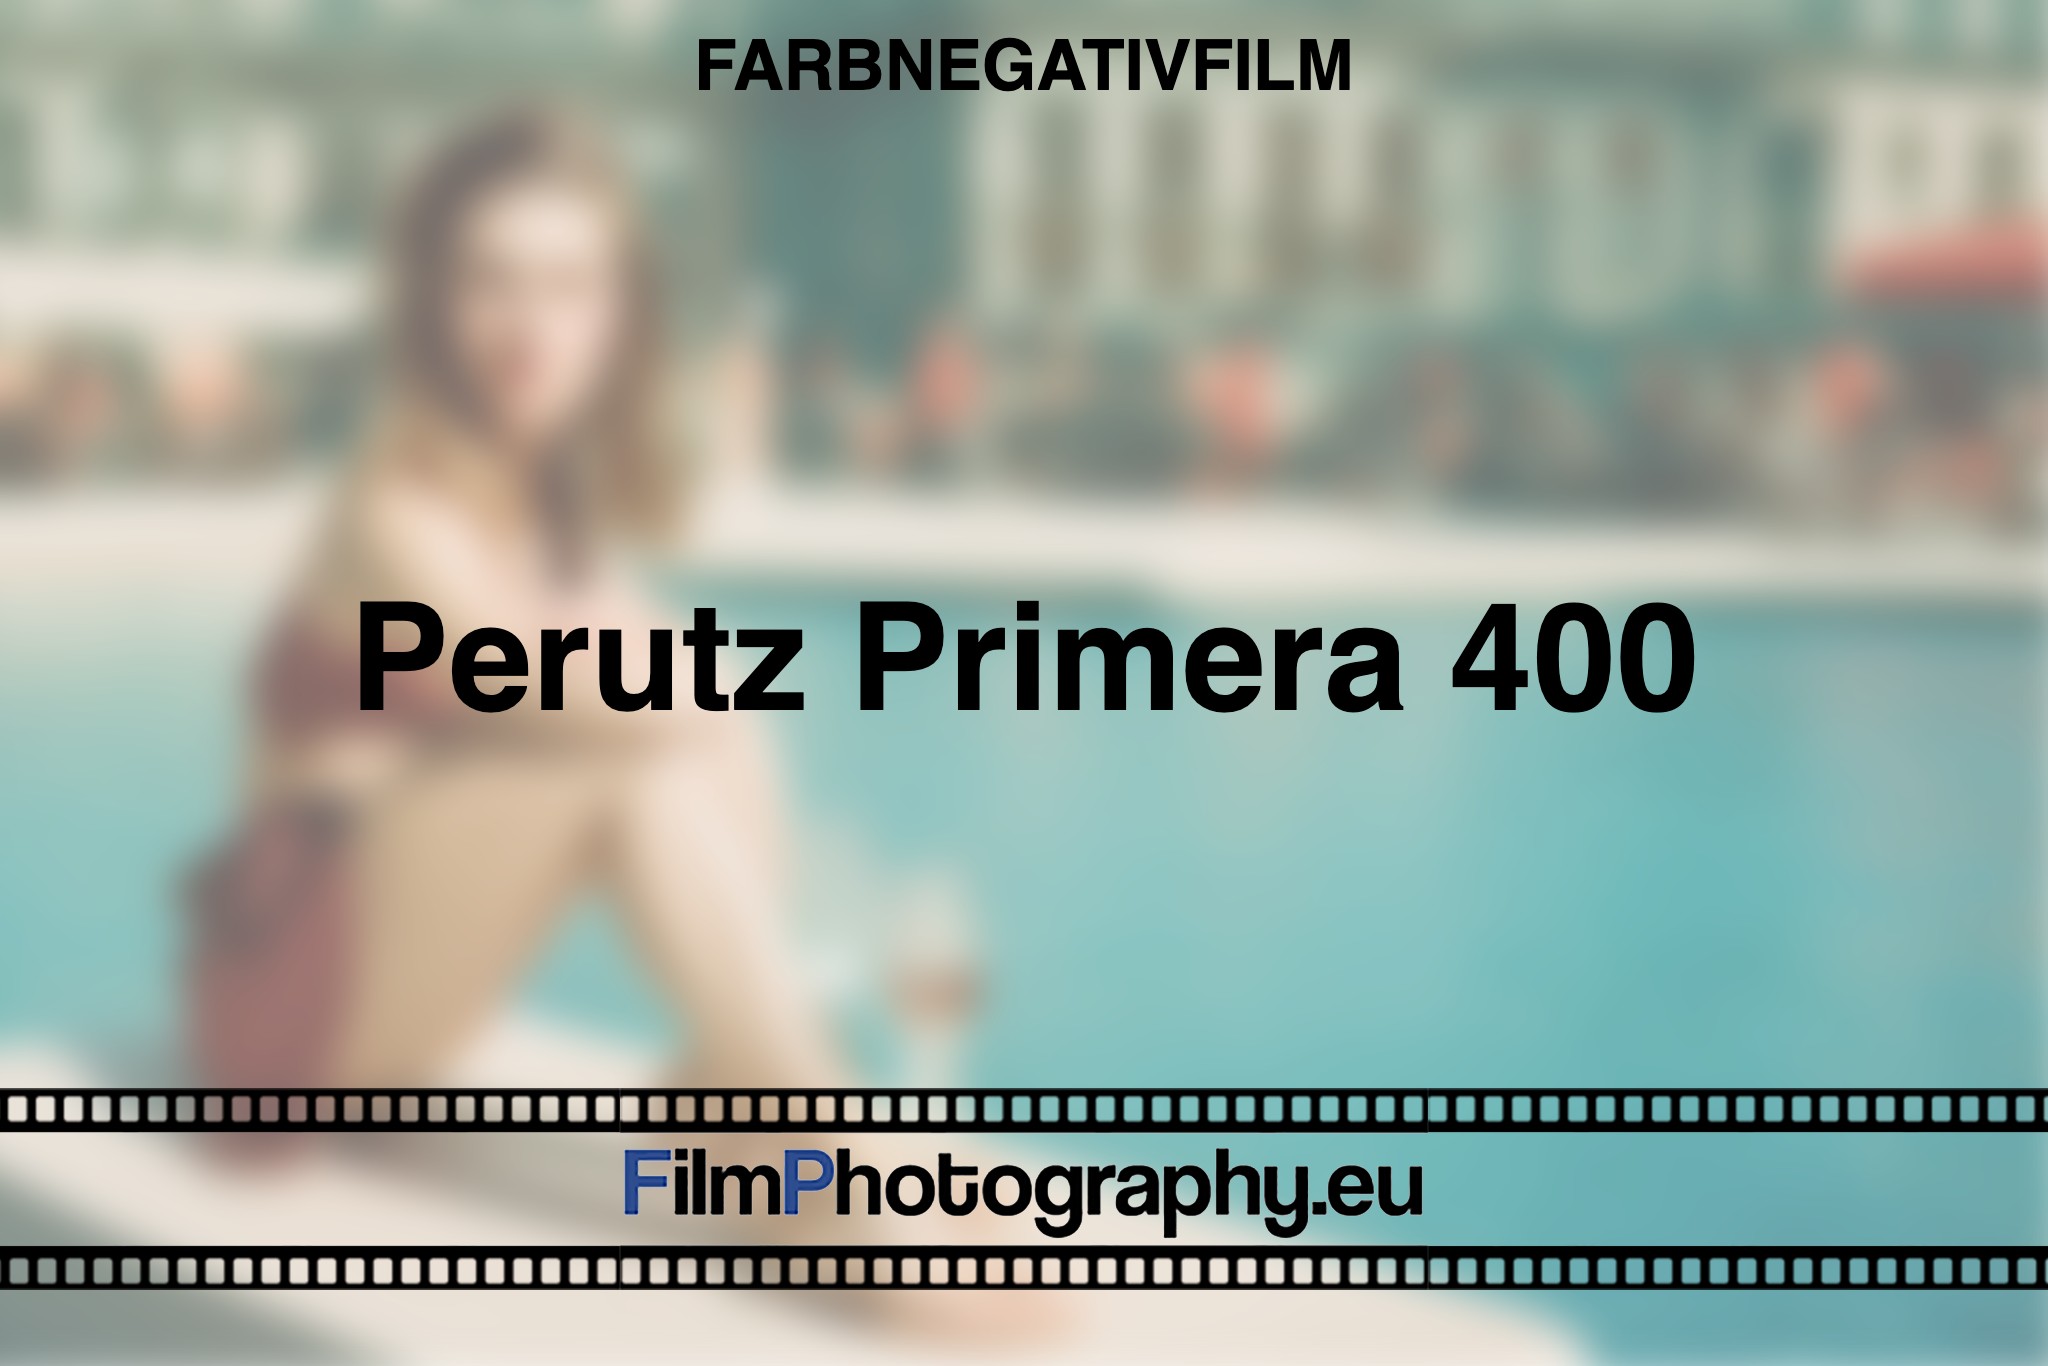 perutz-primera-400-farbnegativfilm-bnv